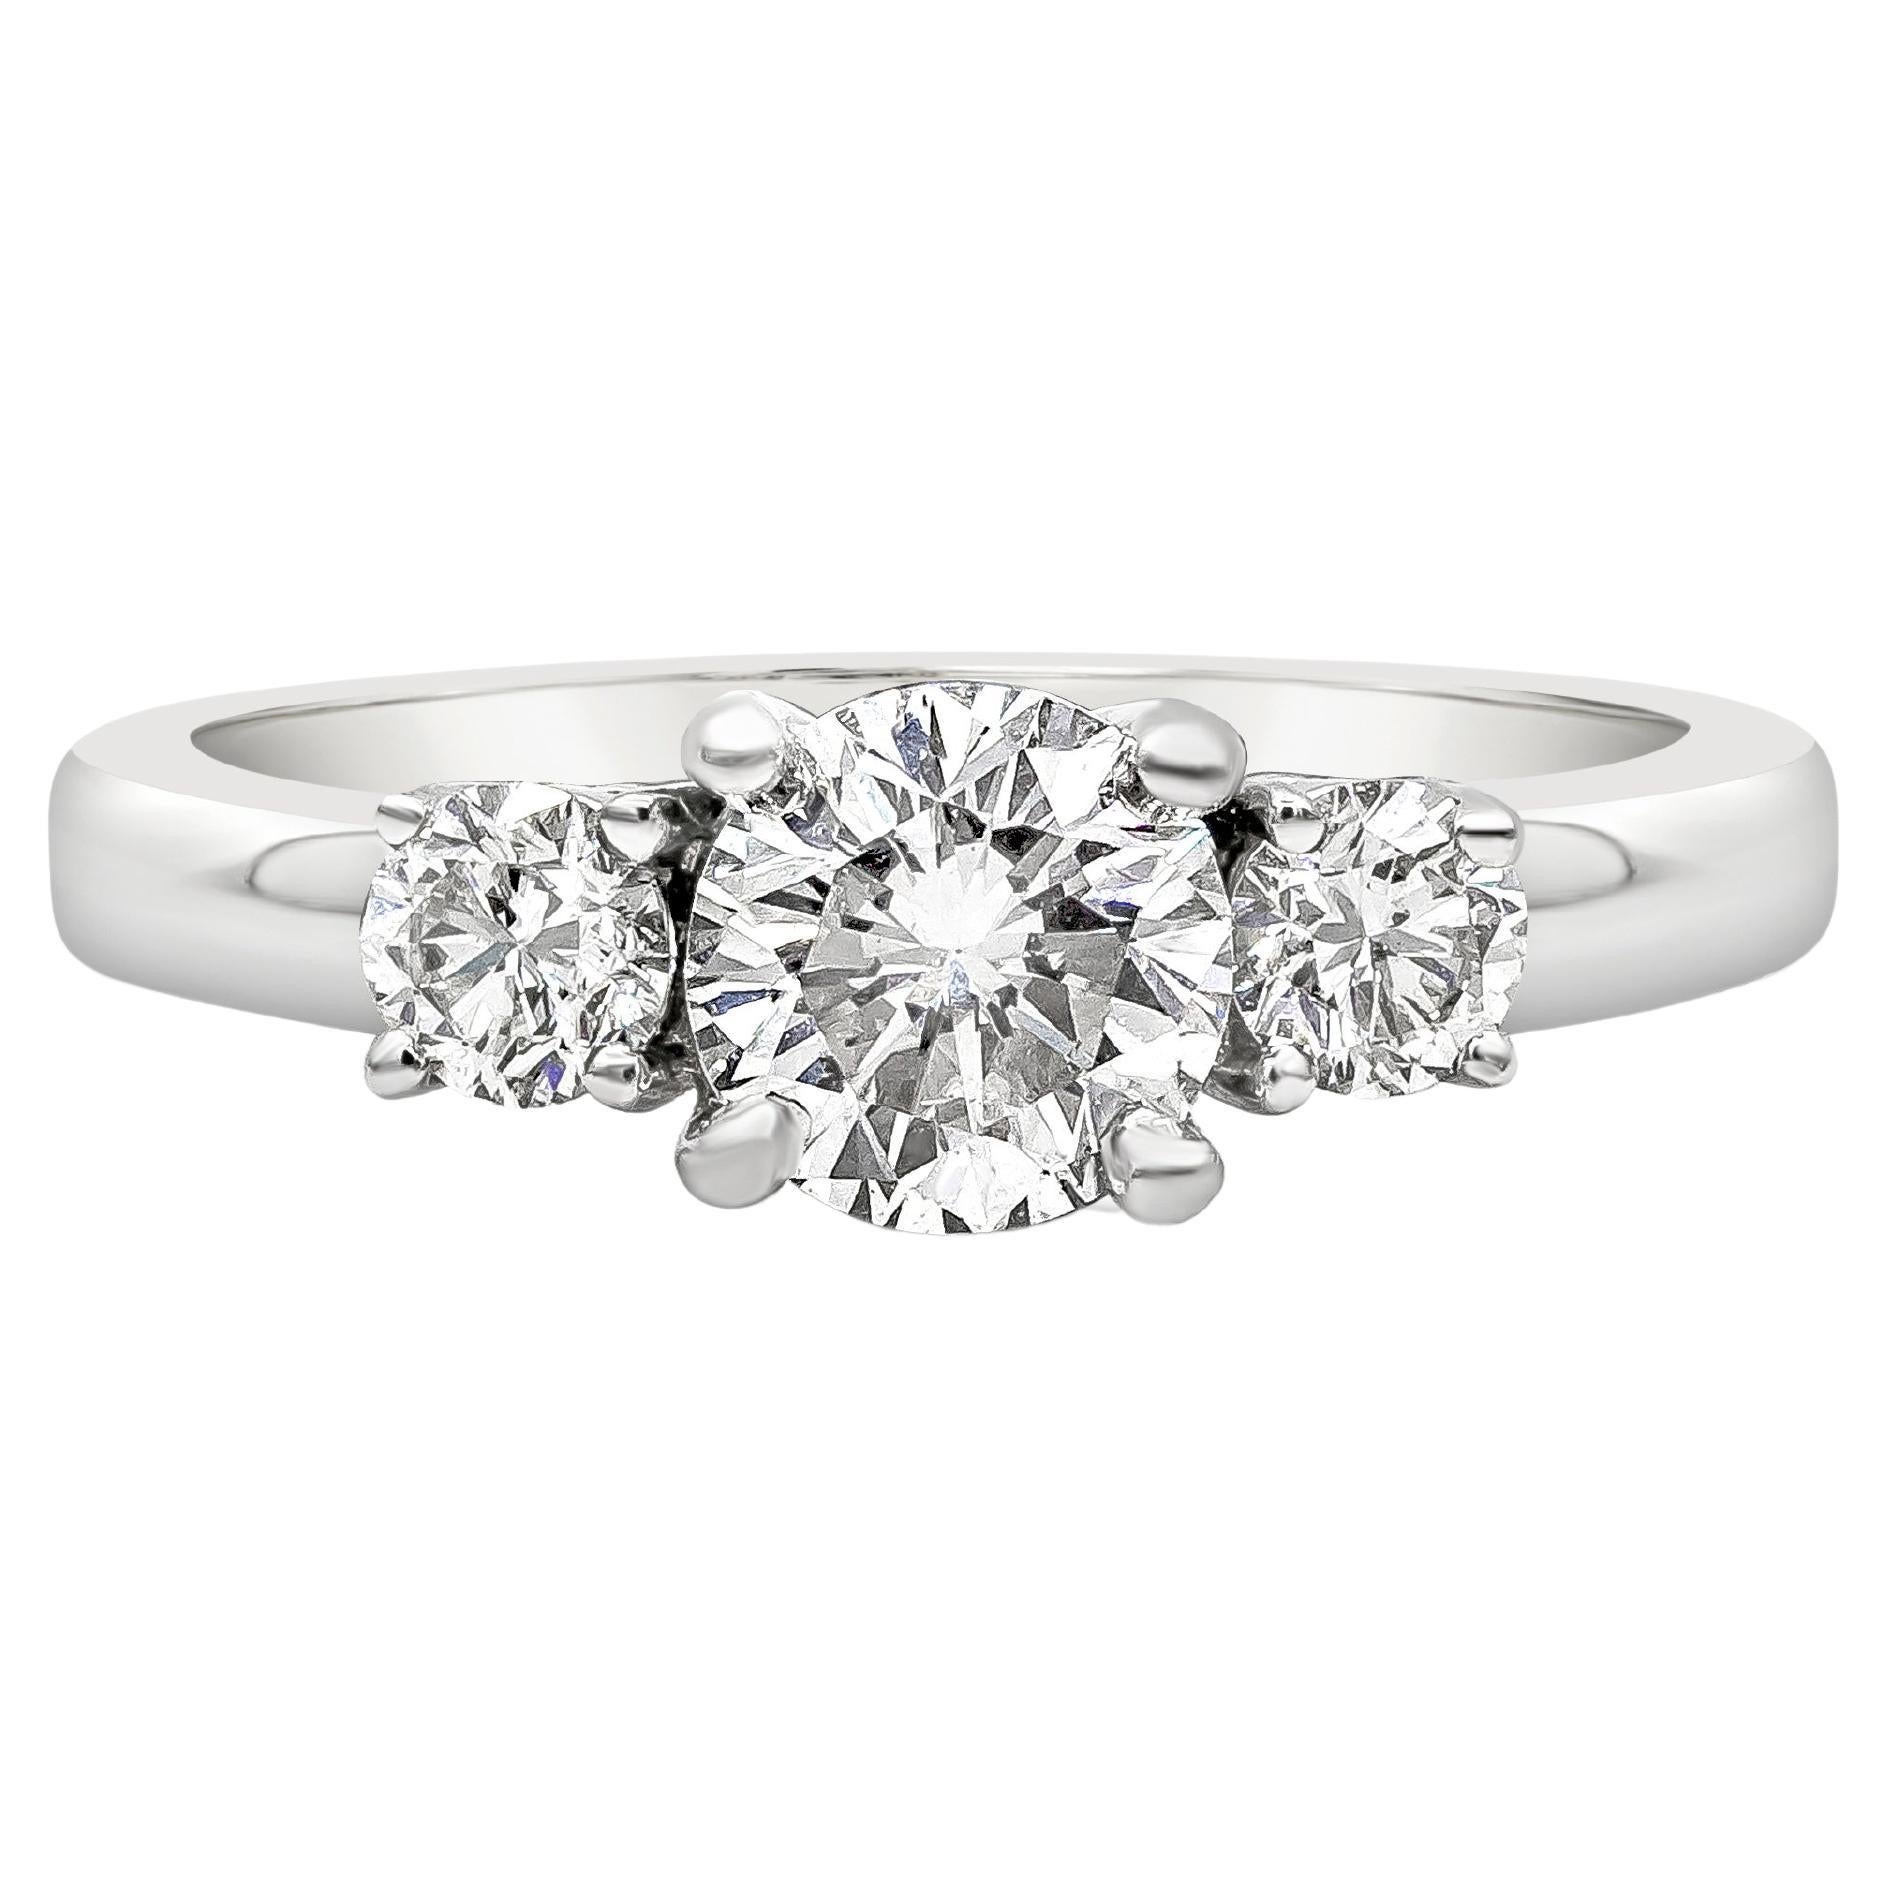 Roman Malakov GIA Certified 1.42 Carats Total Diamond Engagement Ring